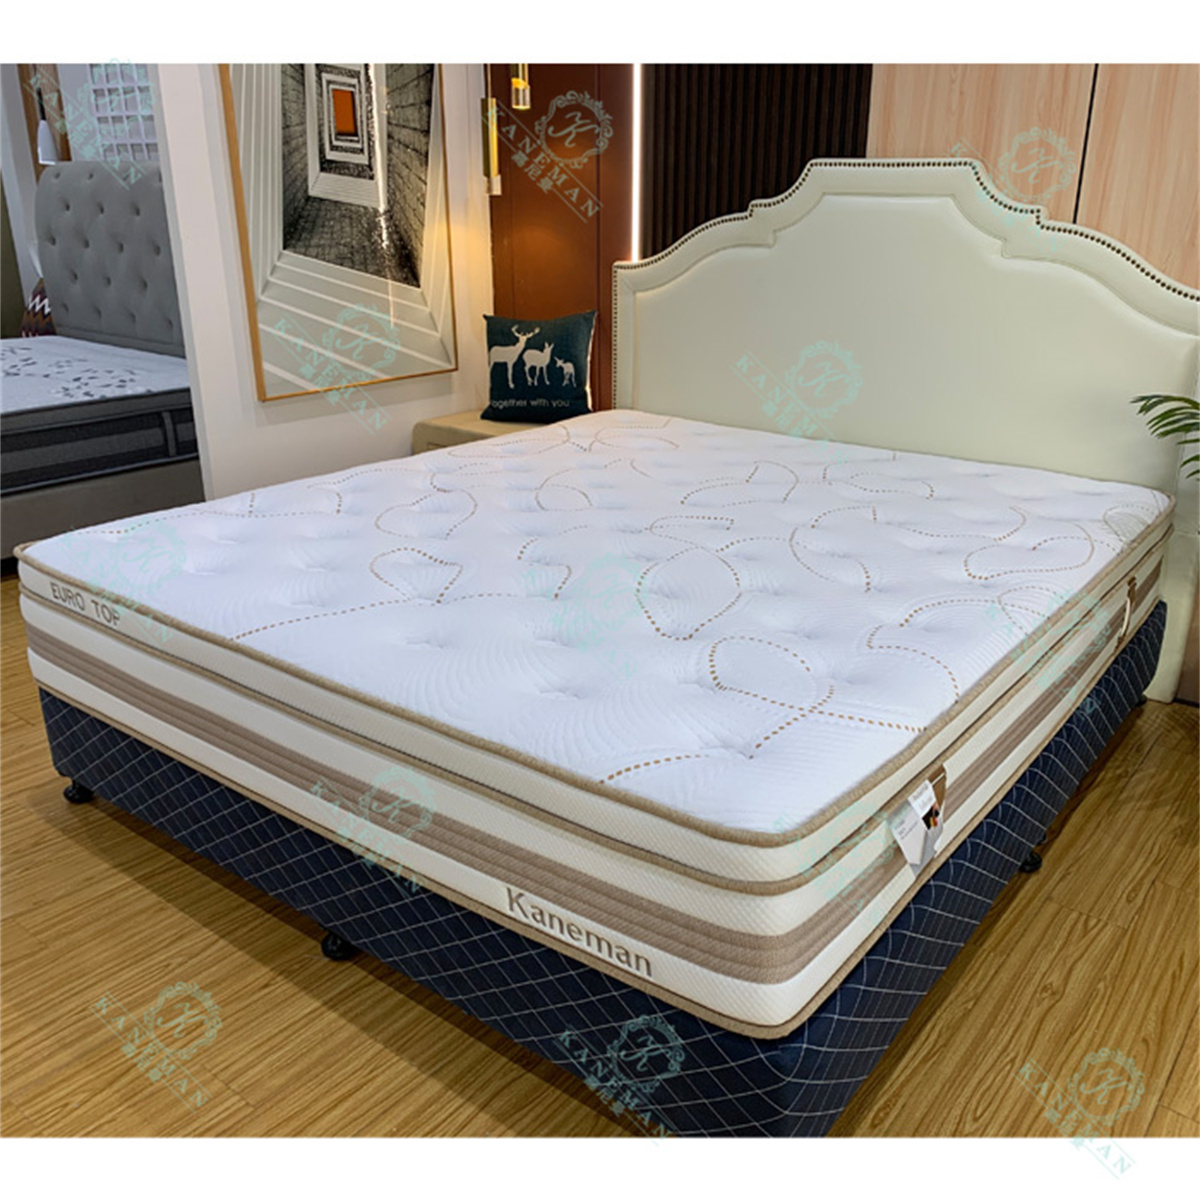 Five star hotel mattress 30cm Firm Pocket Spring Mattress